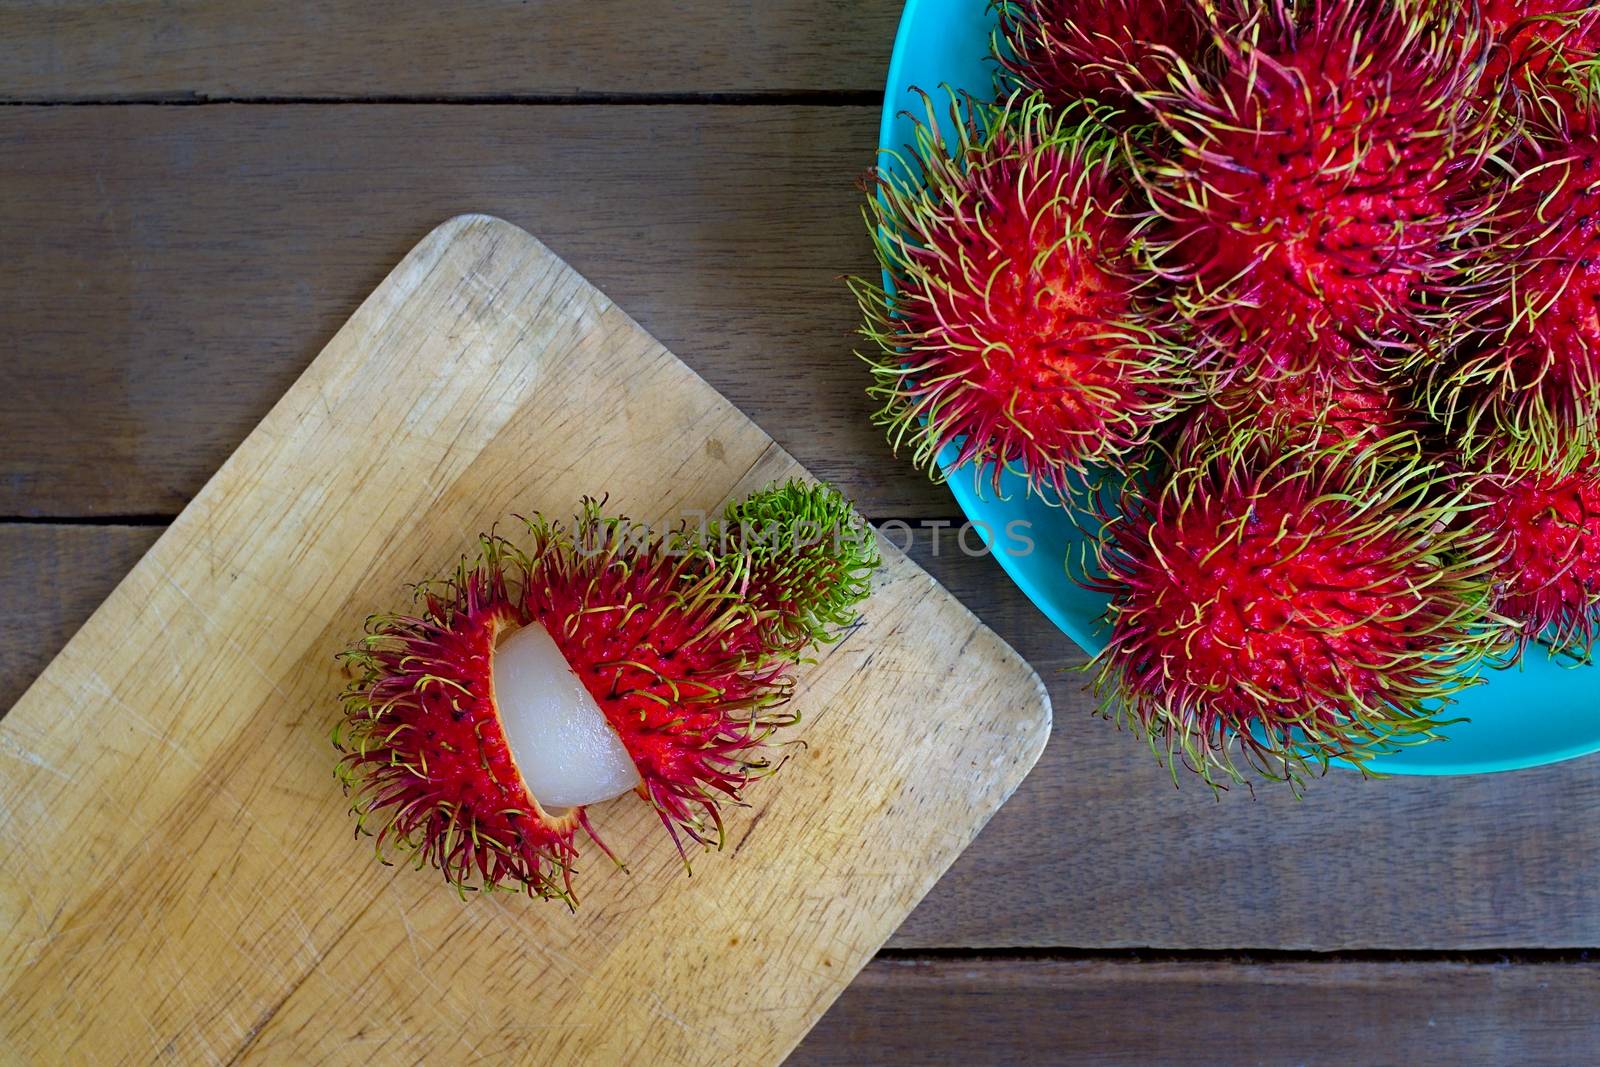 Exotic ripe rambutan fruits from Southeast Asia by Faeldin